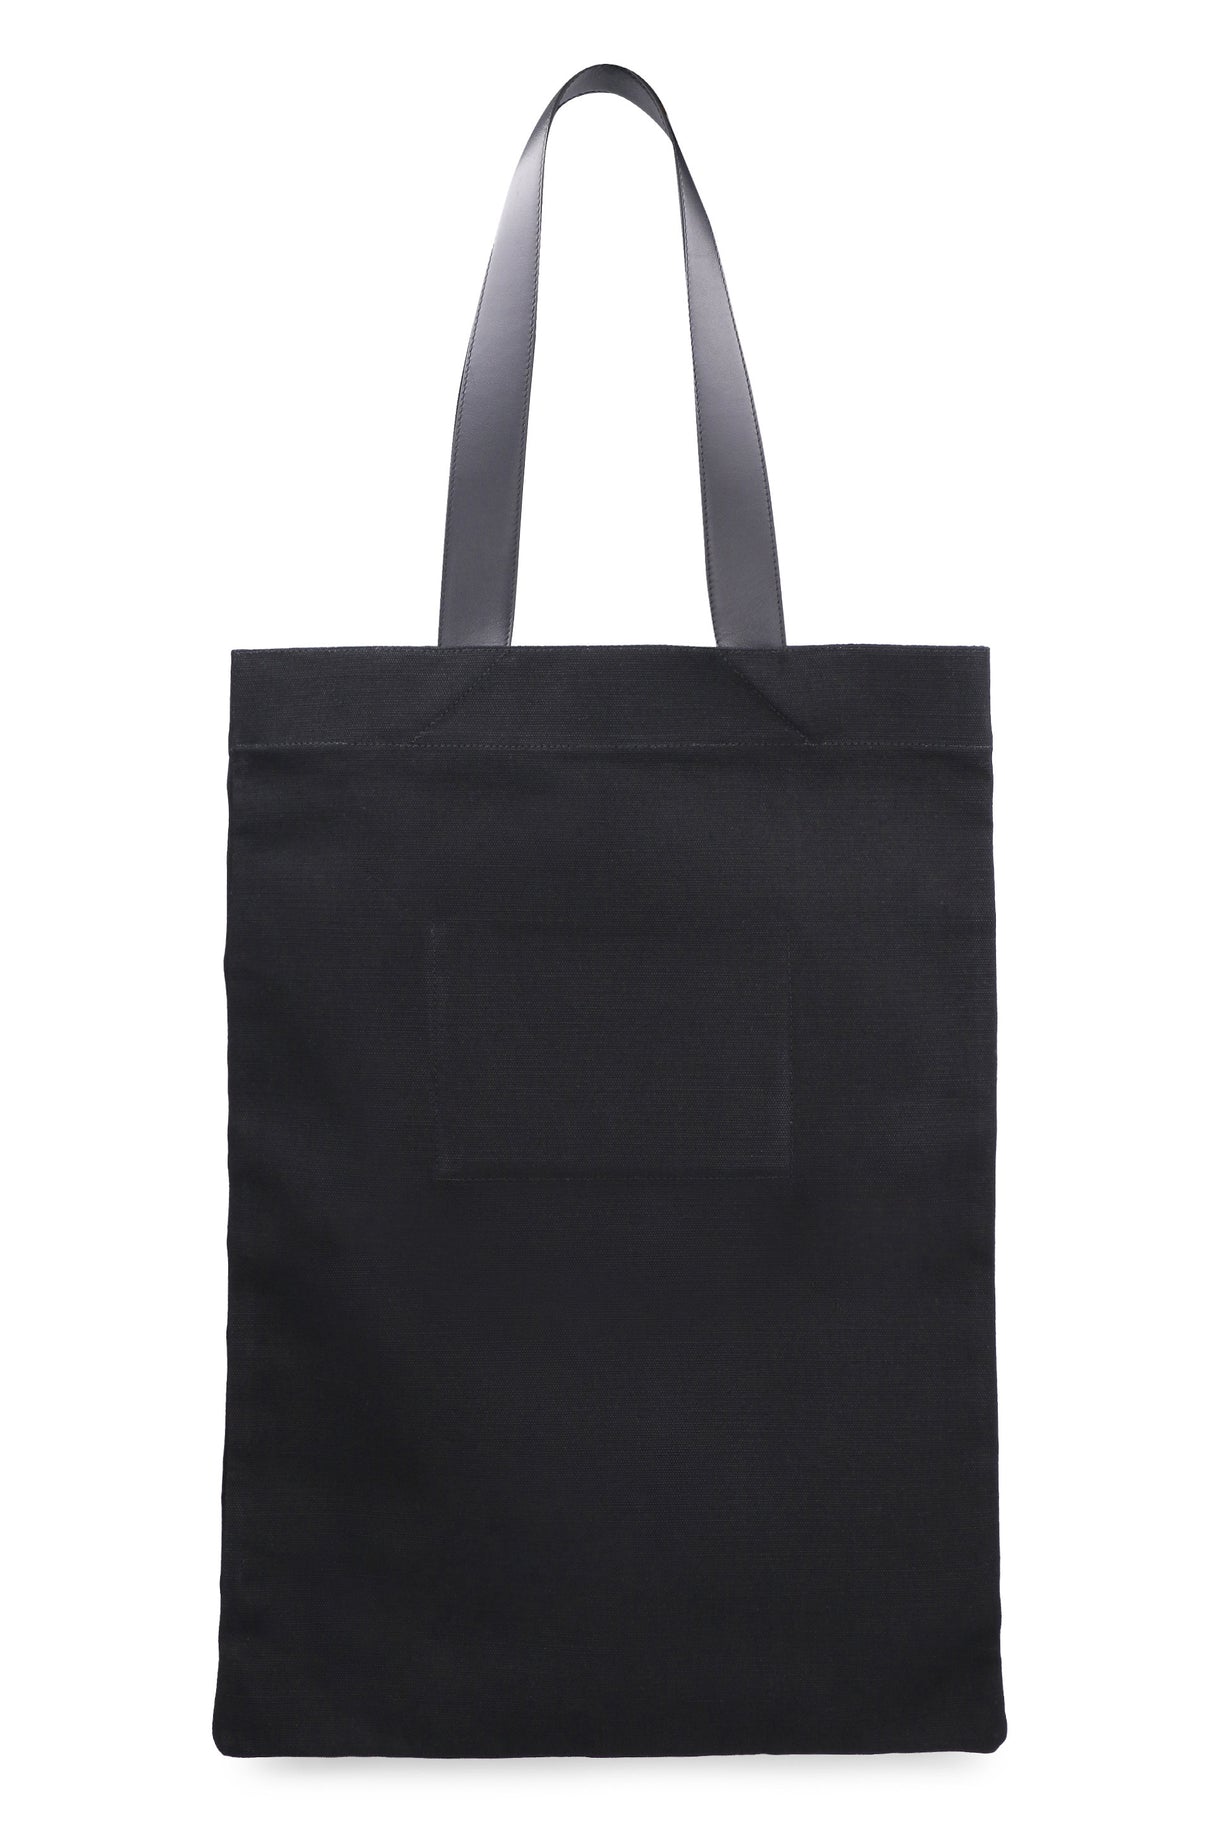 JIL SANDER Stylish Black Canvas Tote Handbag for Women